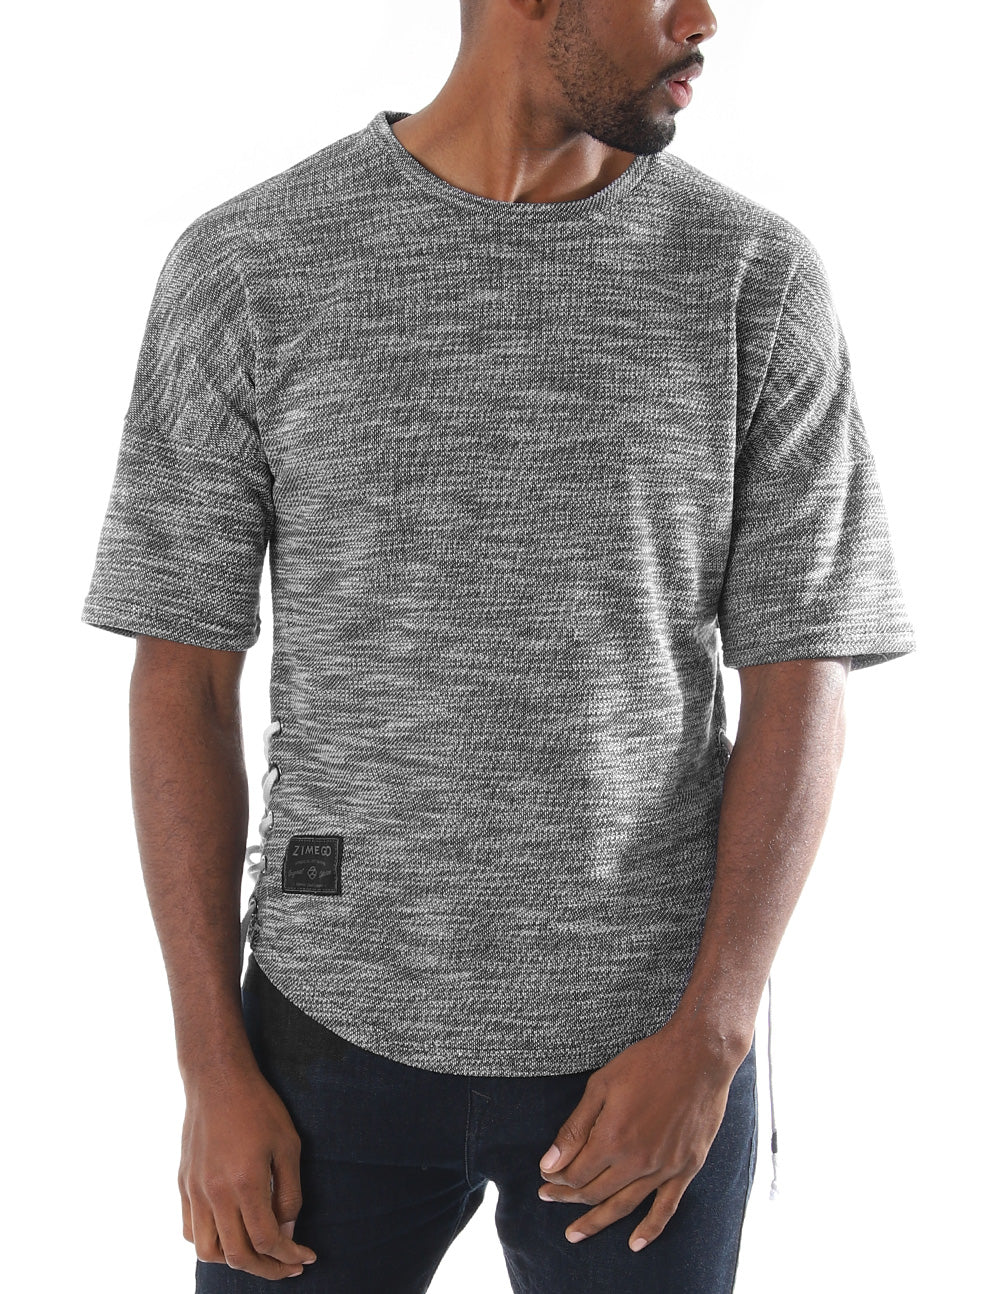 
                  
                    Zimego Men's Wide Shoulder Short Sleeve Laced Up Round Bottom T-Shirts Black
                  
                